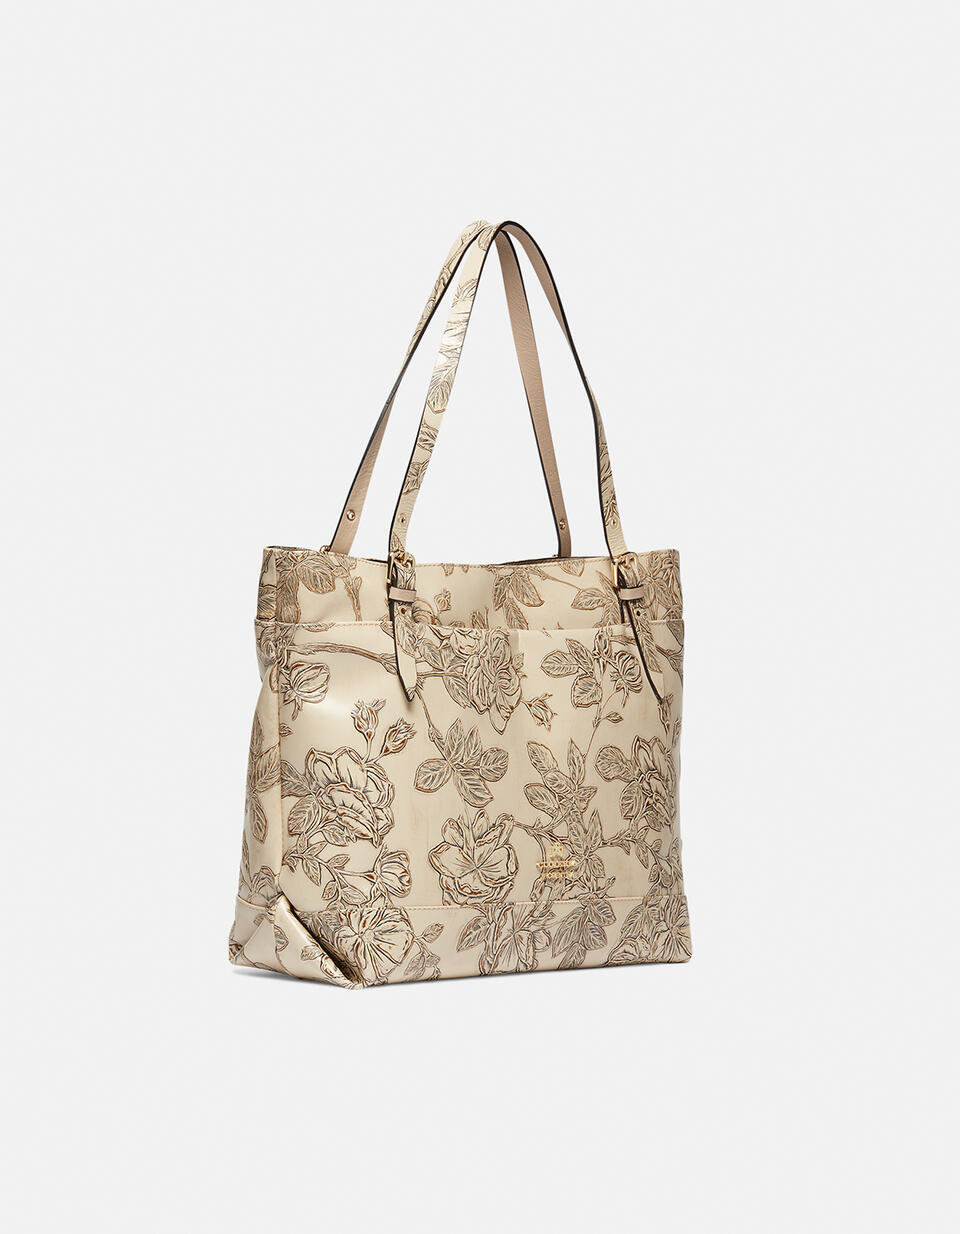 Big shopping bag keystone design - SHOPPING - WOMEN'S BAGS | bags Mimì TAUPE - SHOPPING - WOMEN'S BAGS | bagsCuoieria Fiorentina